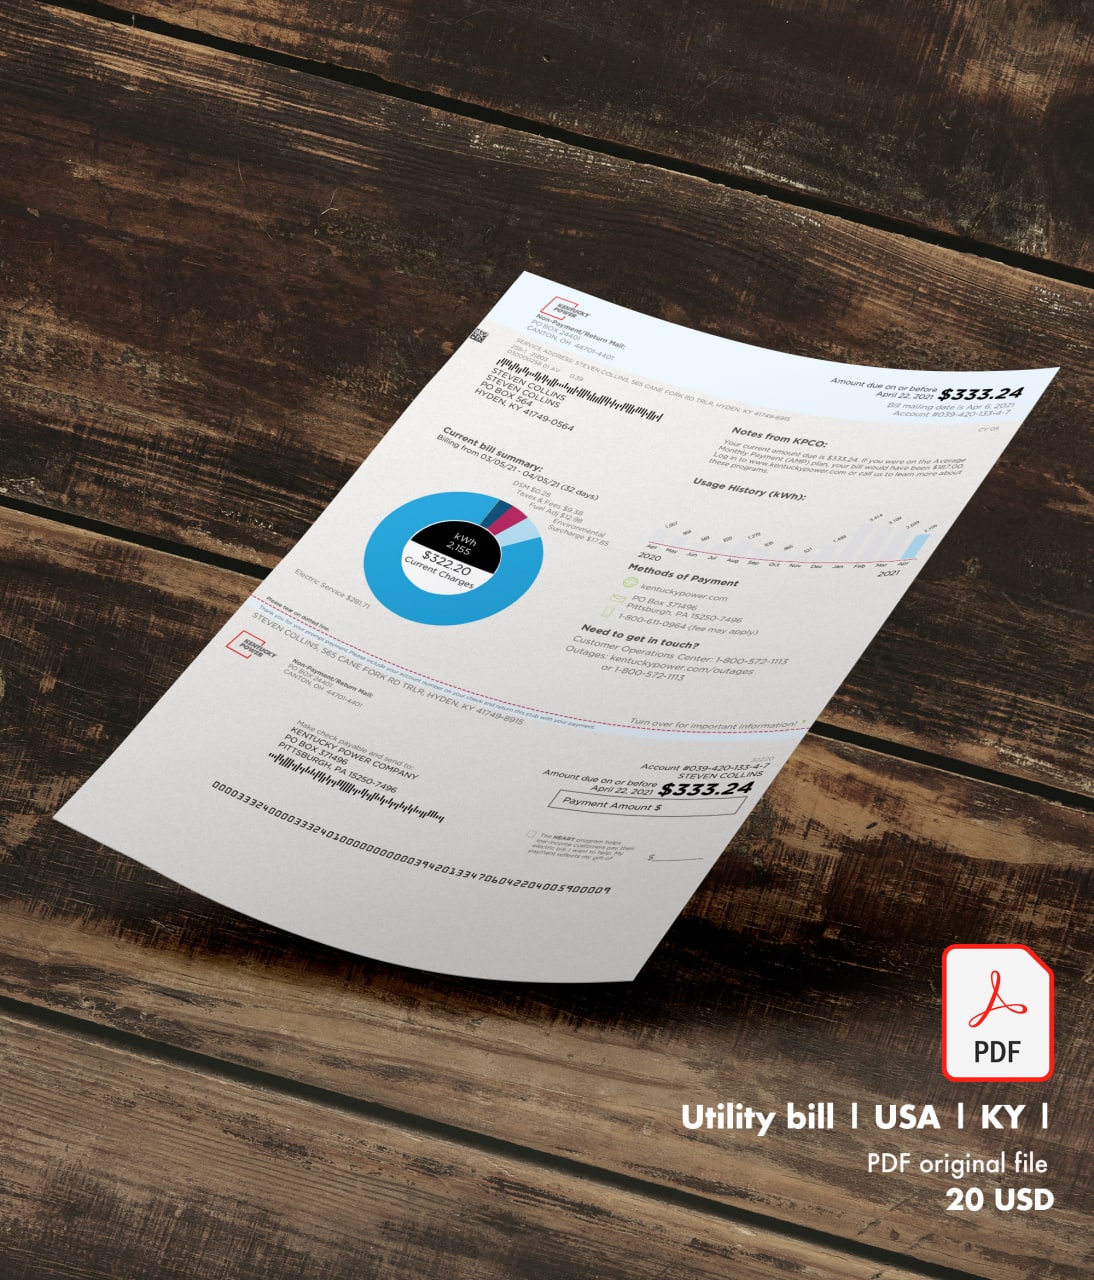 Utility bill | Kentucky Power | USA | KY1